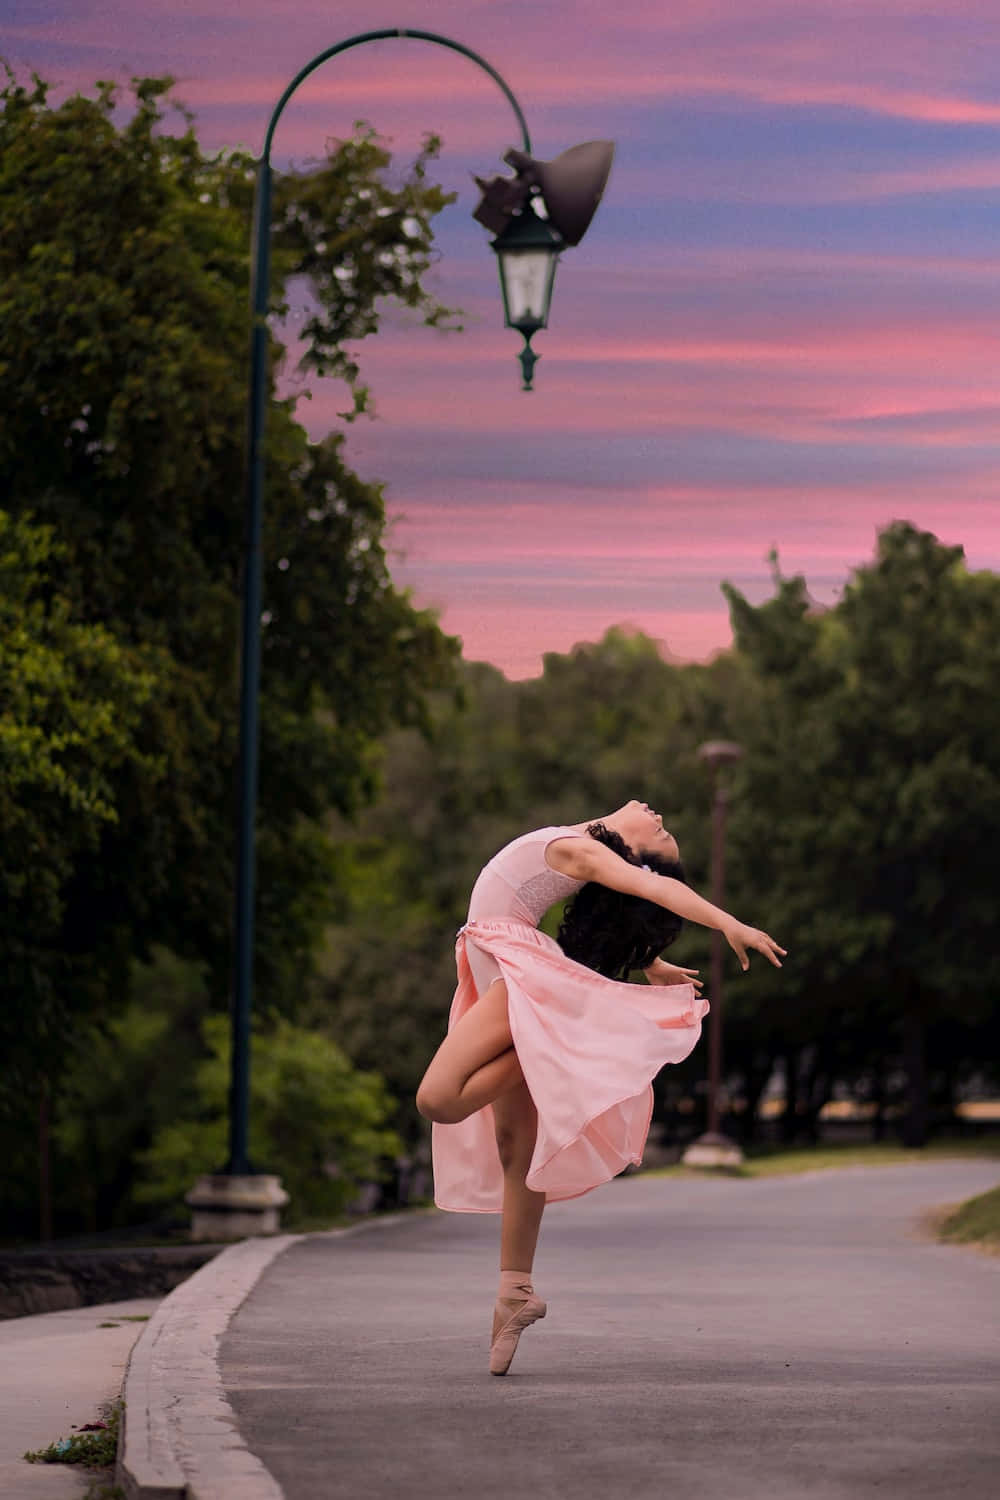 Graceful Ballerina in Action